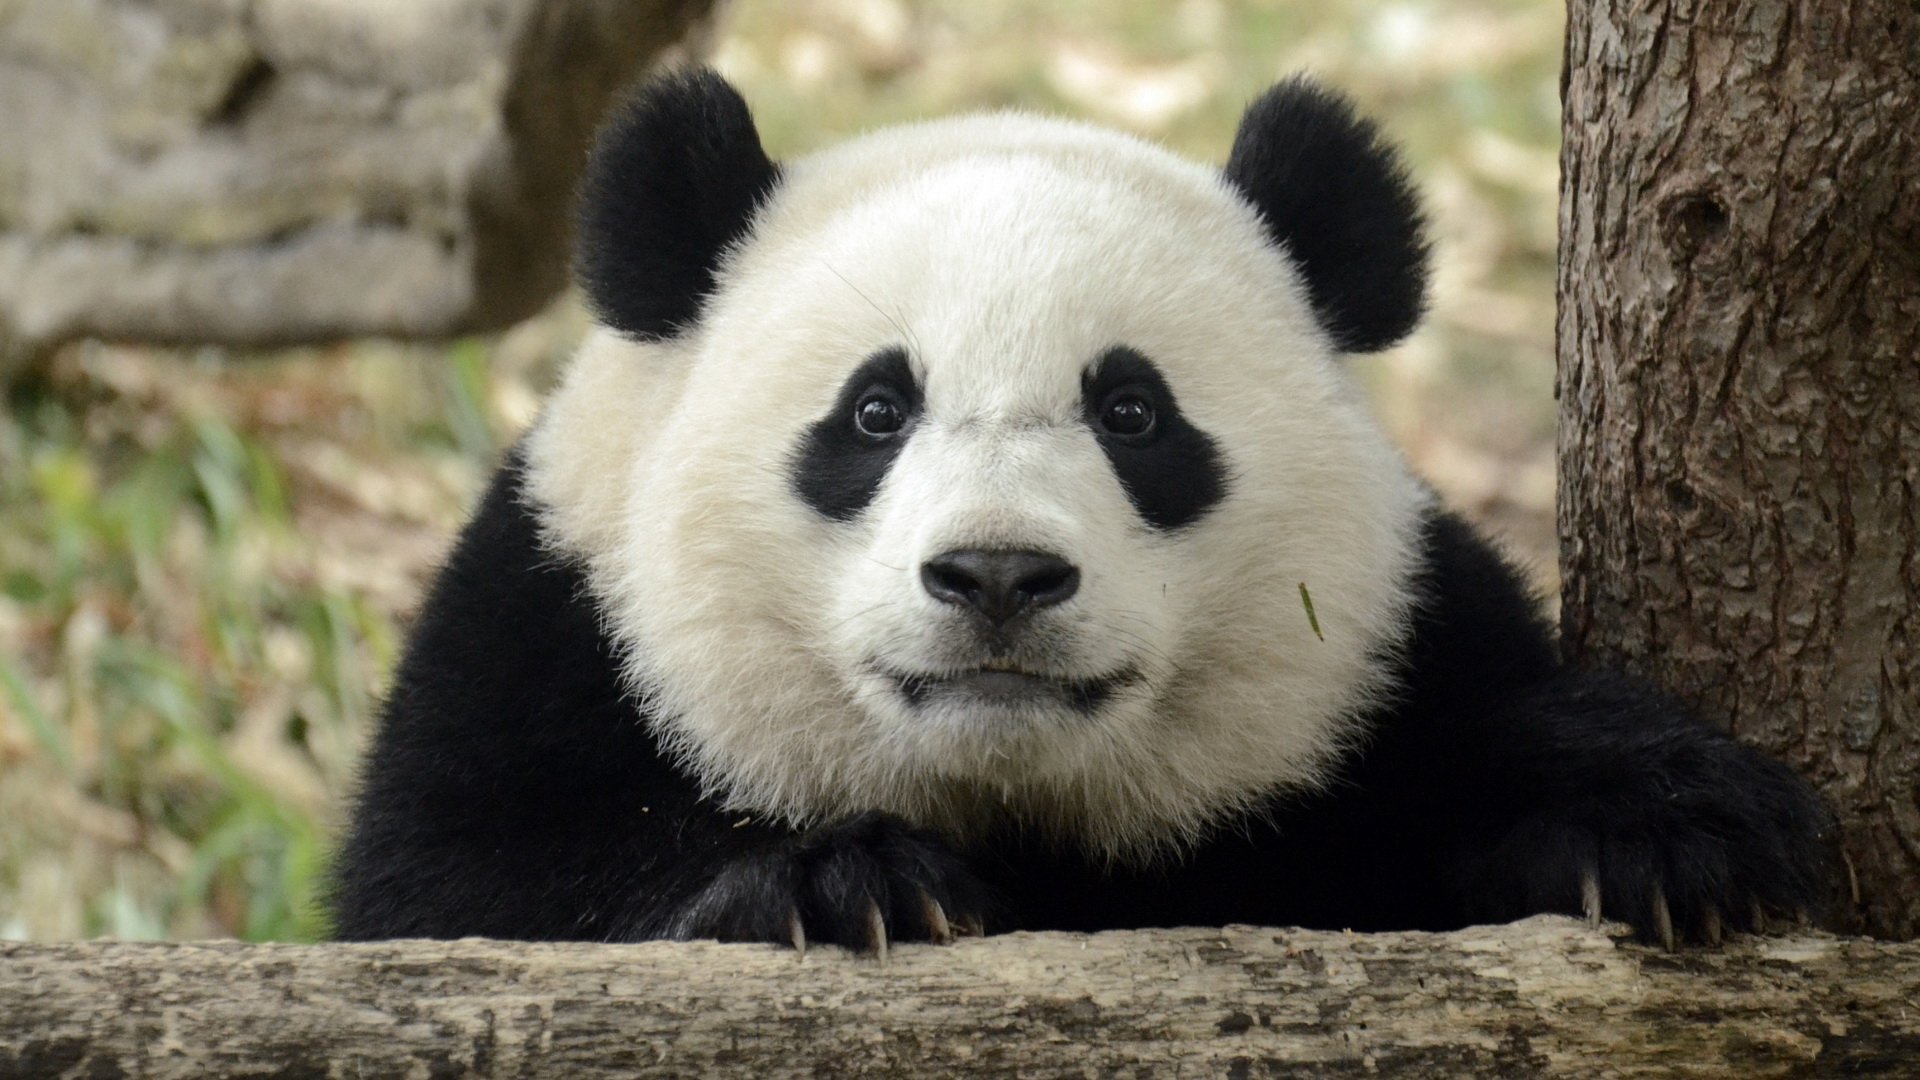 Panda Full HD Wallpaper and Background Image | 1920x1080 | ID:588909